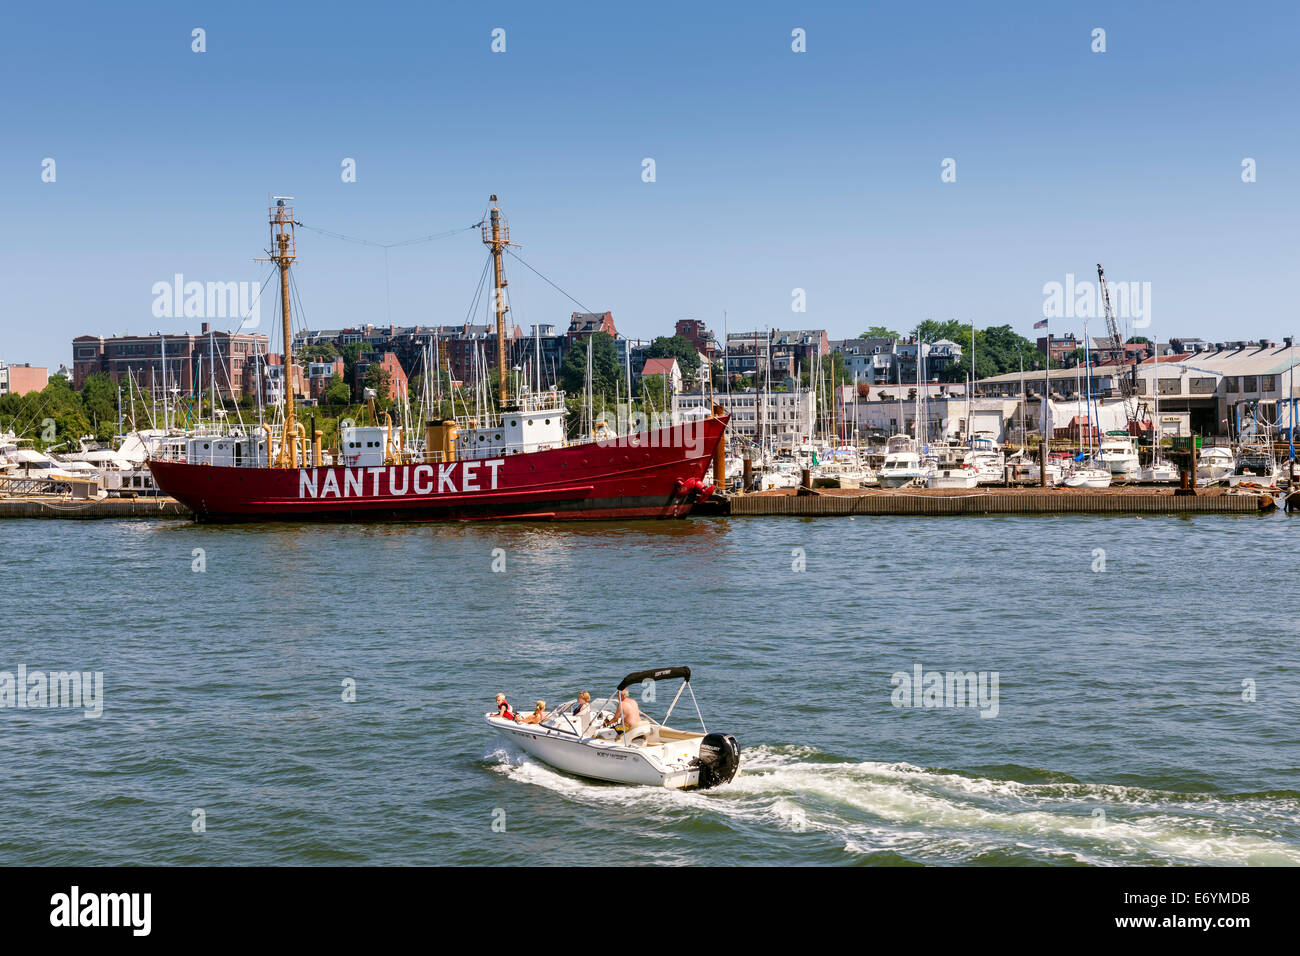 Lightship 112 Nantucket berthed at Boston harbor shipyard and marina. Boston, Massachusetts - USA Stock Photo